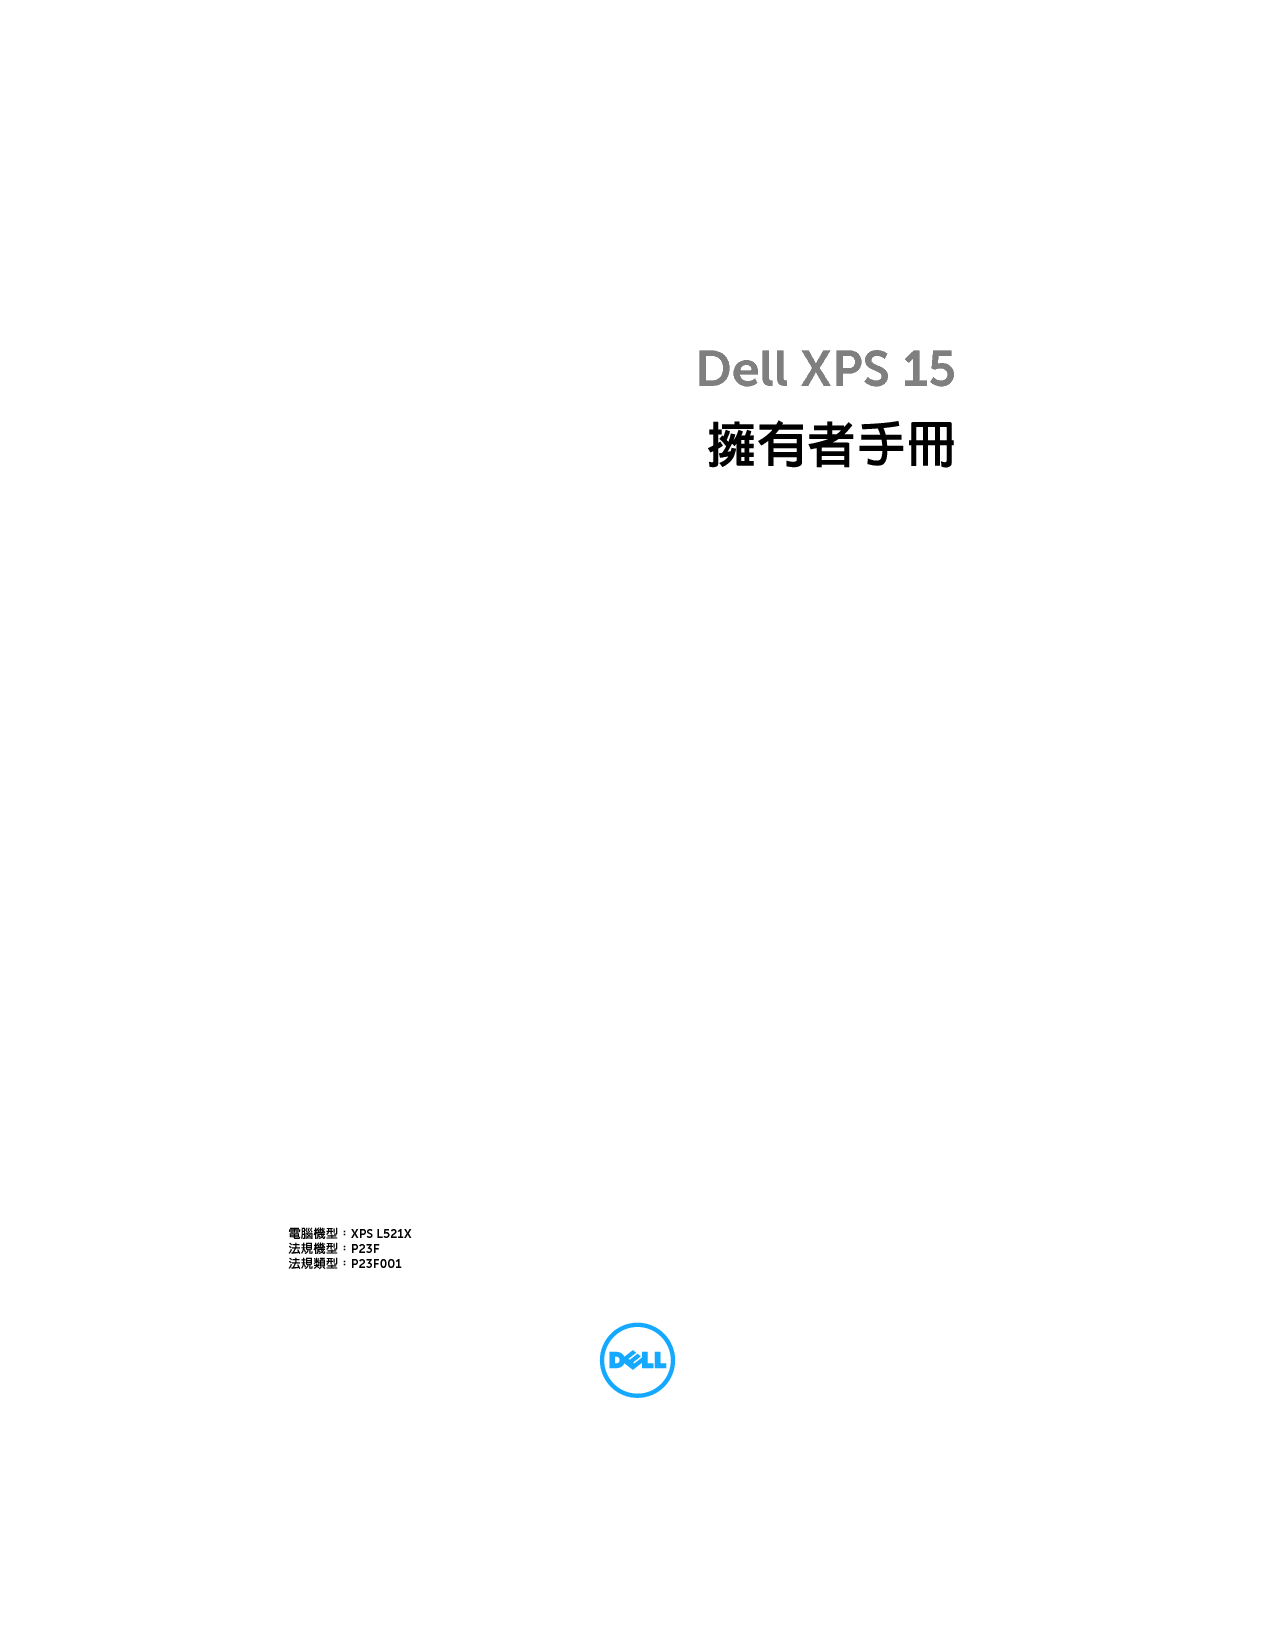 戴尔 Dell XPS 15 L521X 繁体 用户手册 封面